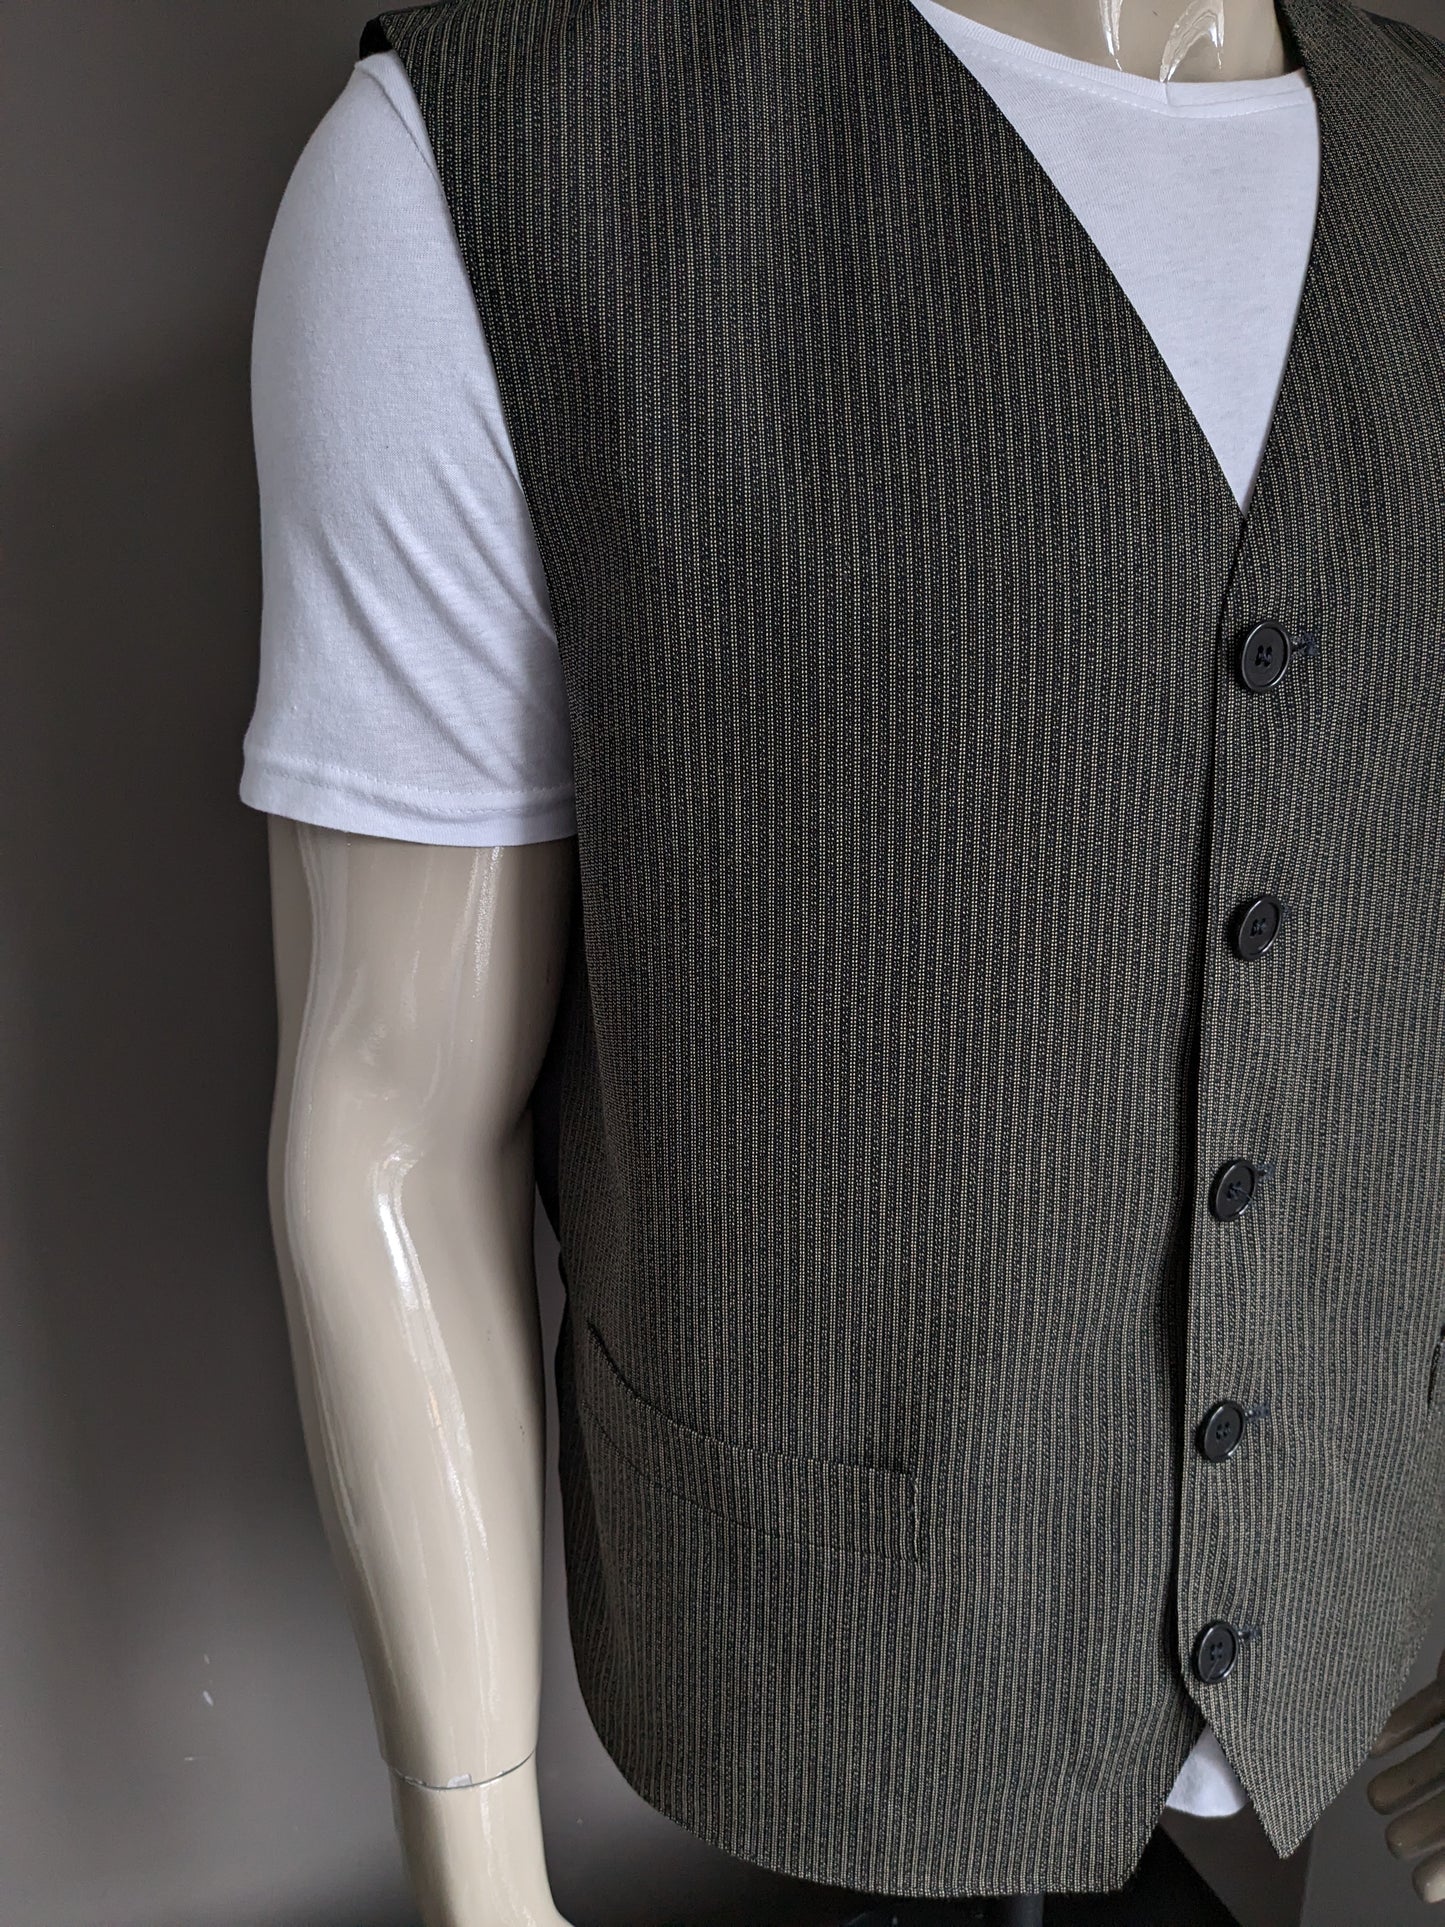 Waistcoat. Gray black striped. Size L. #329.